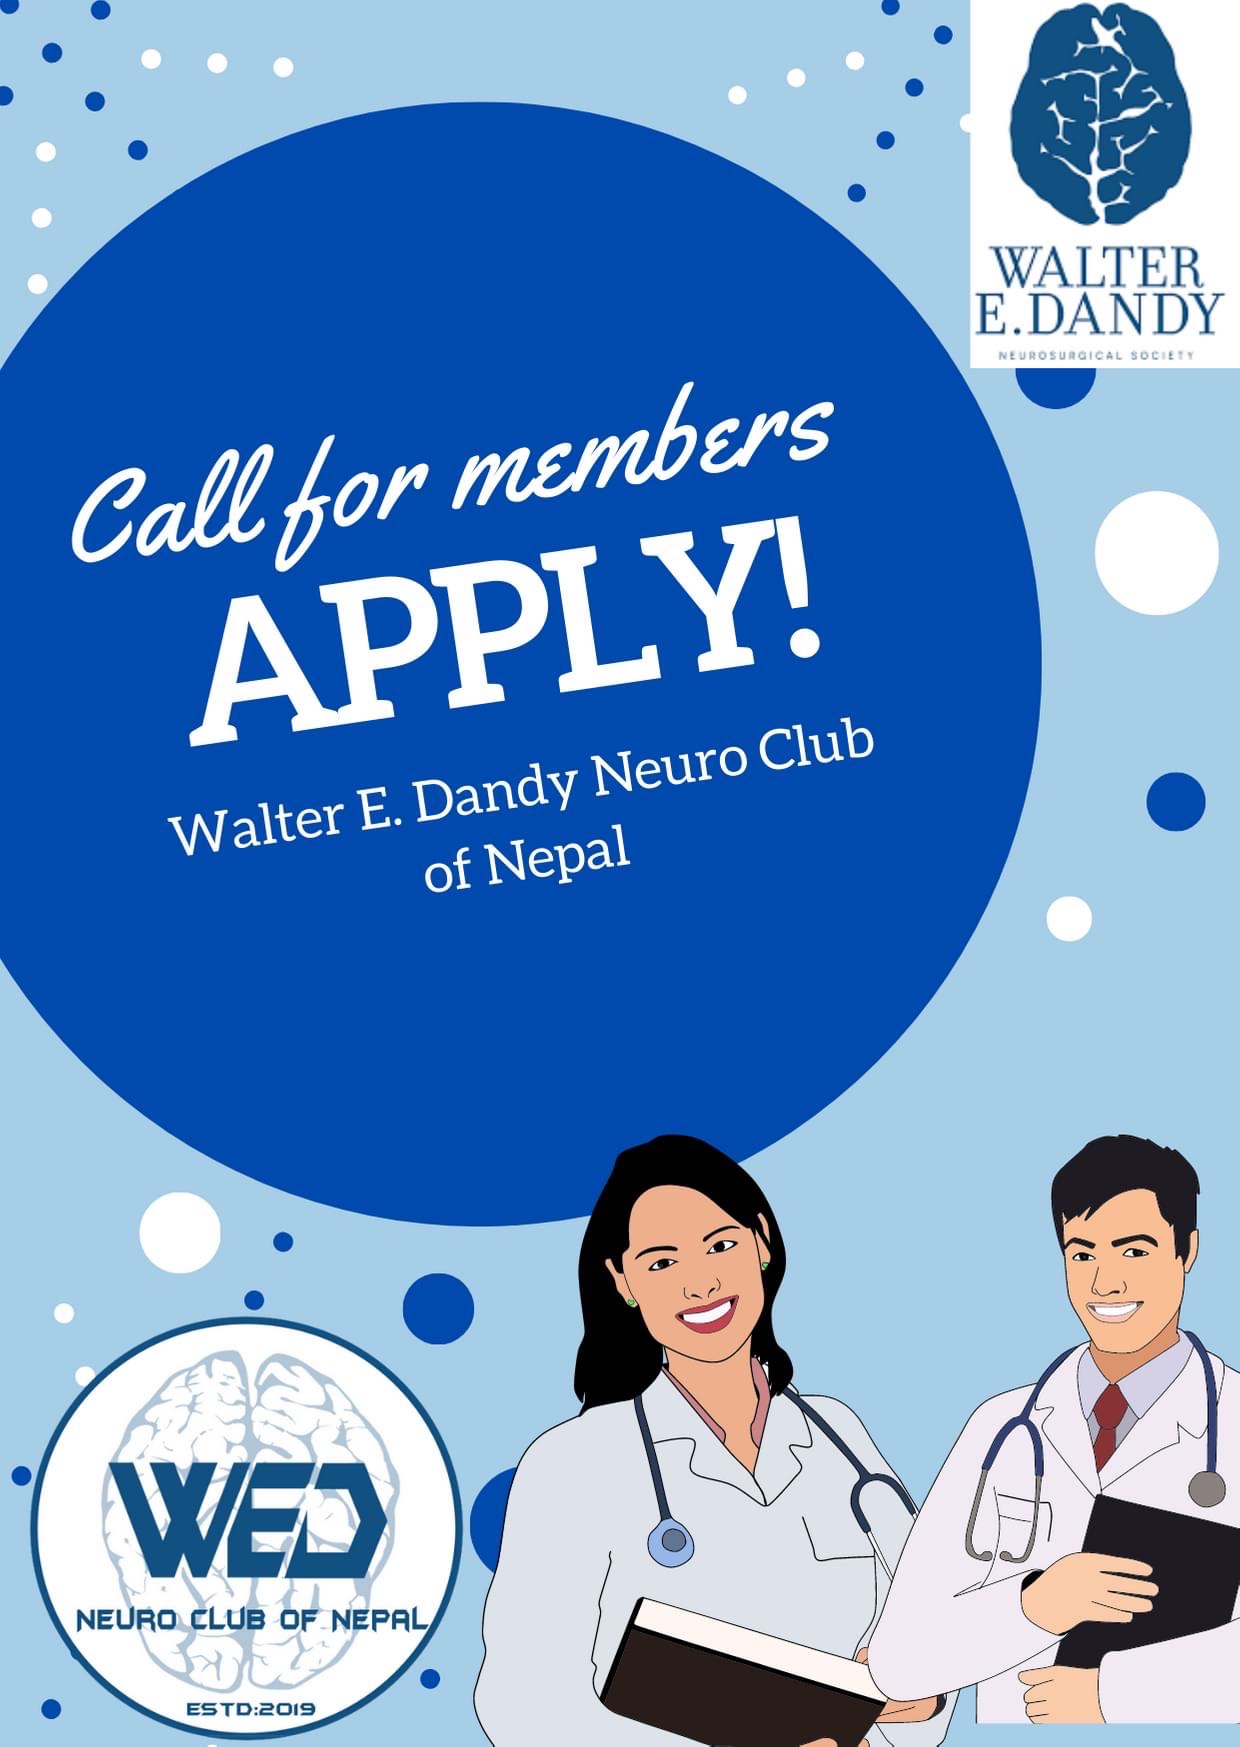 Walter E Dandy Neuro Club Of Nepal (@WalterNepal) / Twitter